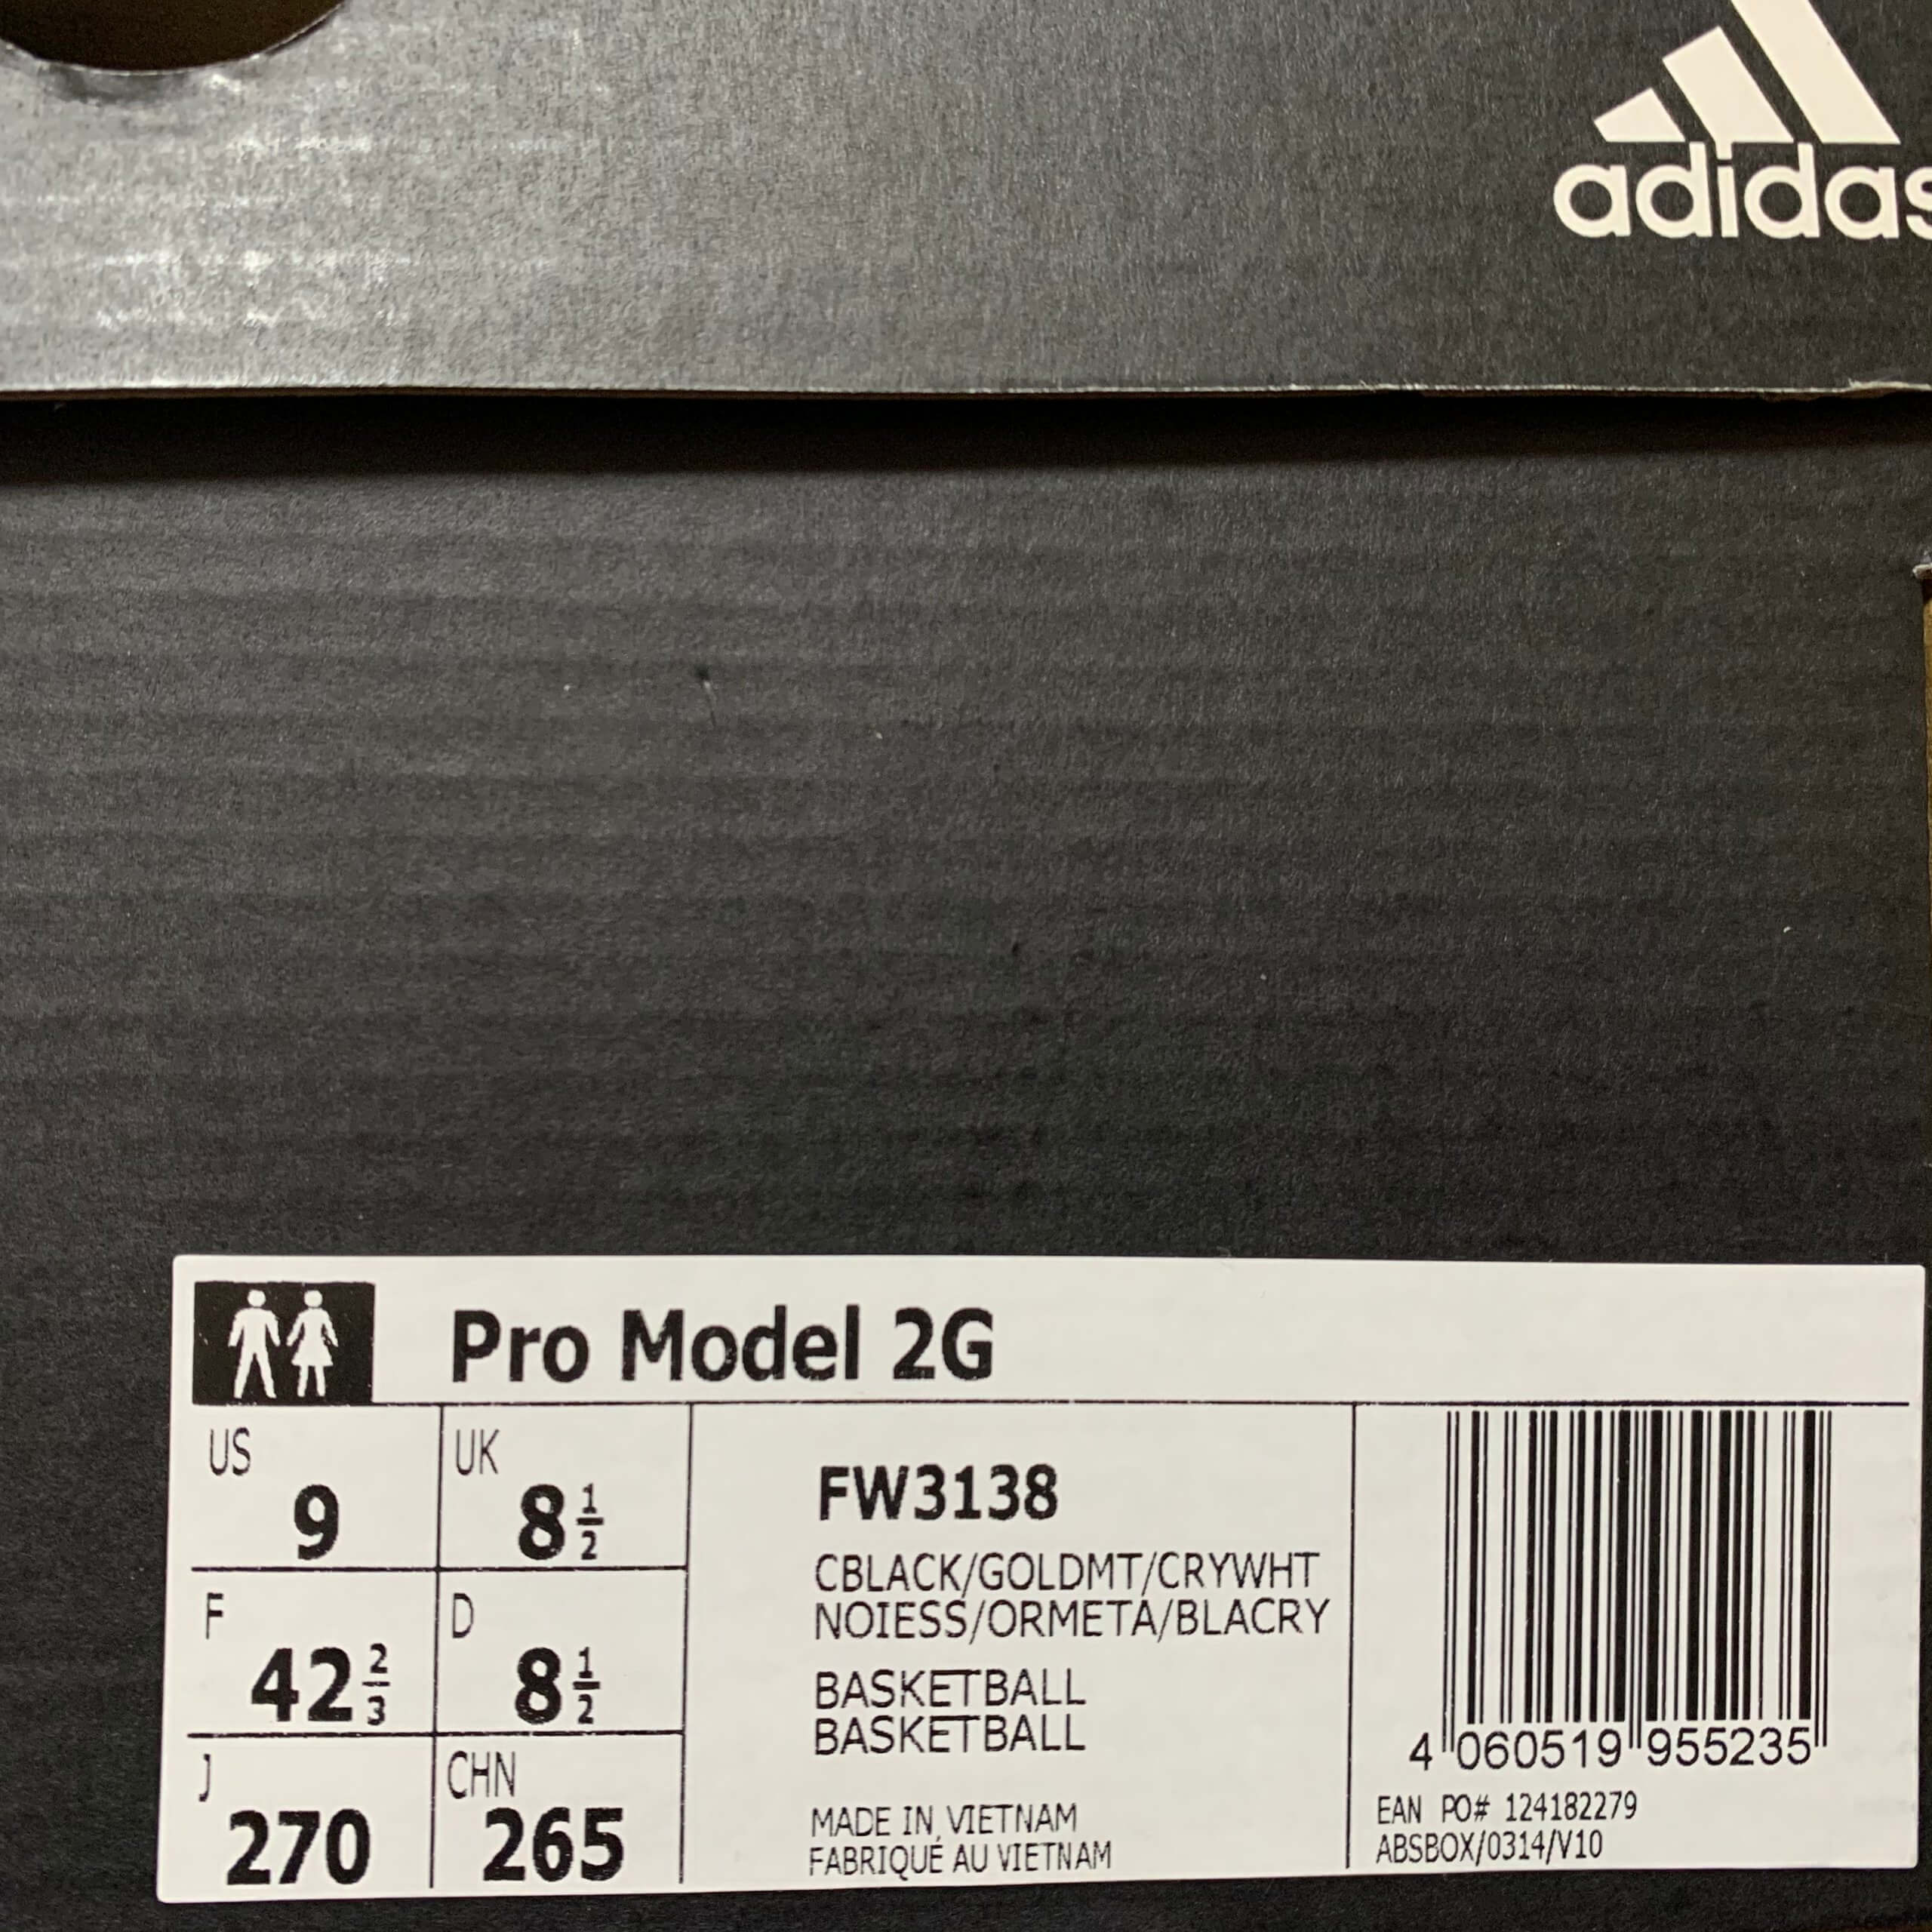 Adidas Pro Model 2G(2020) Performance Review - ASTERKICKS